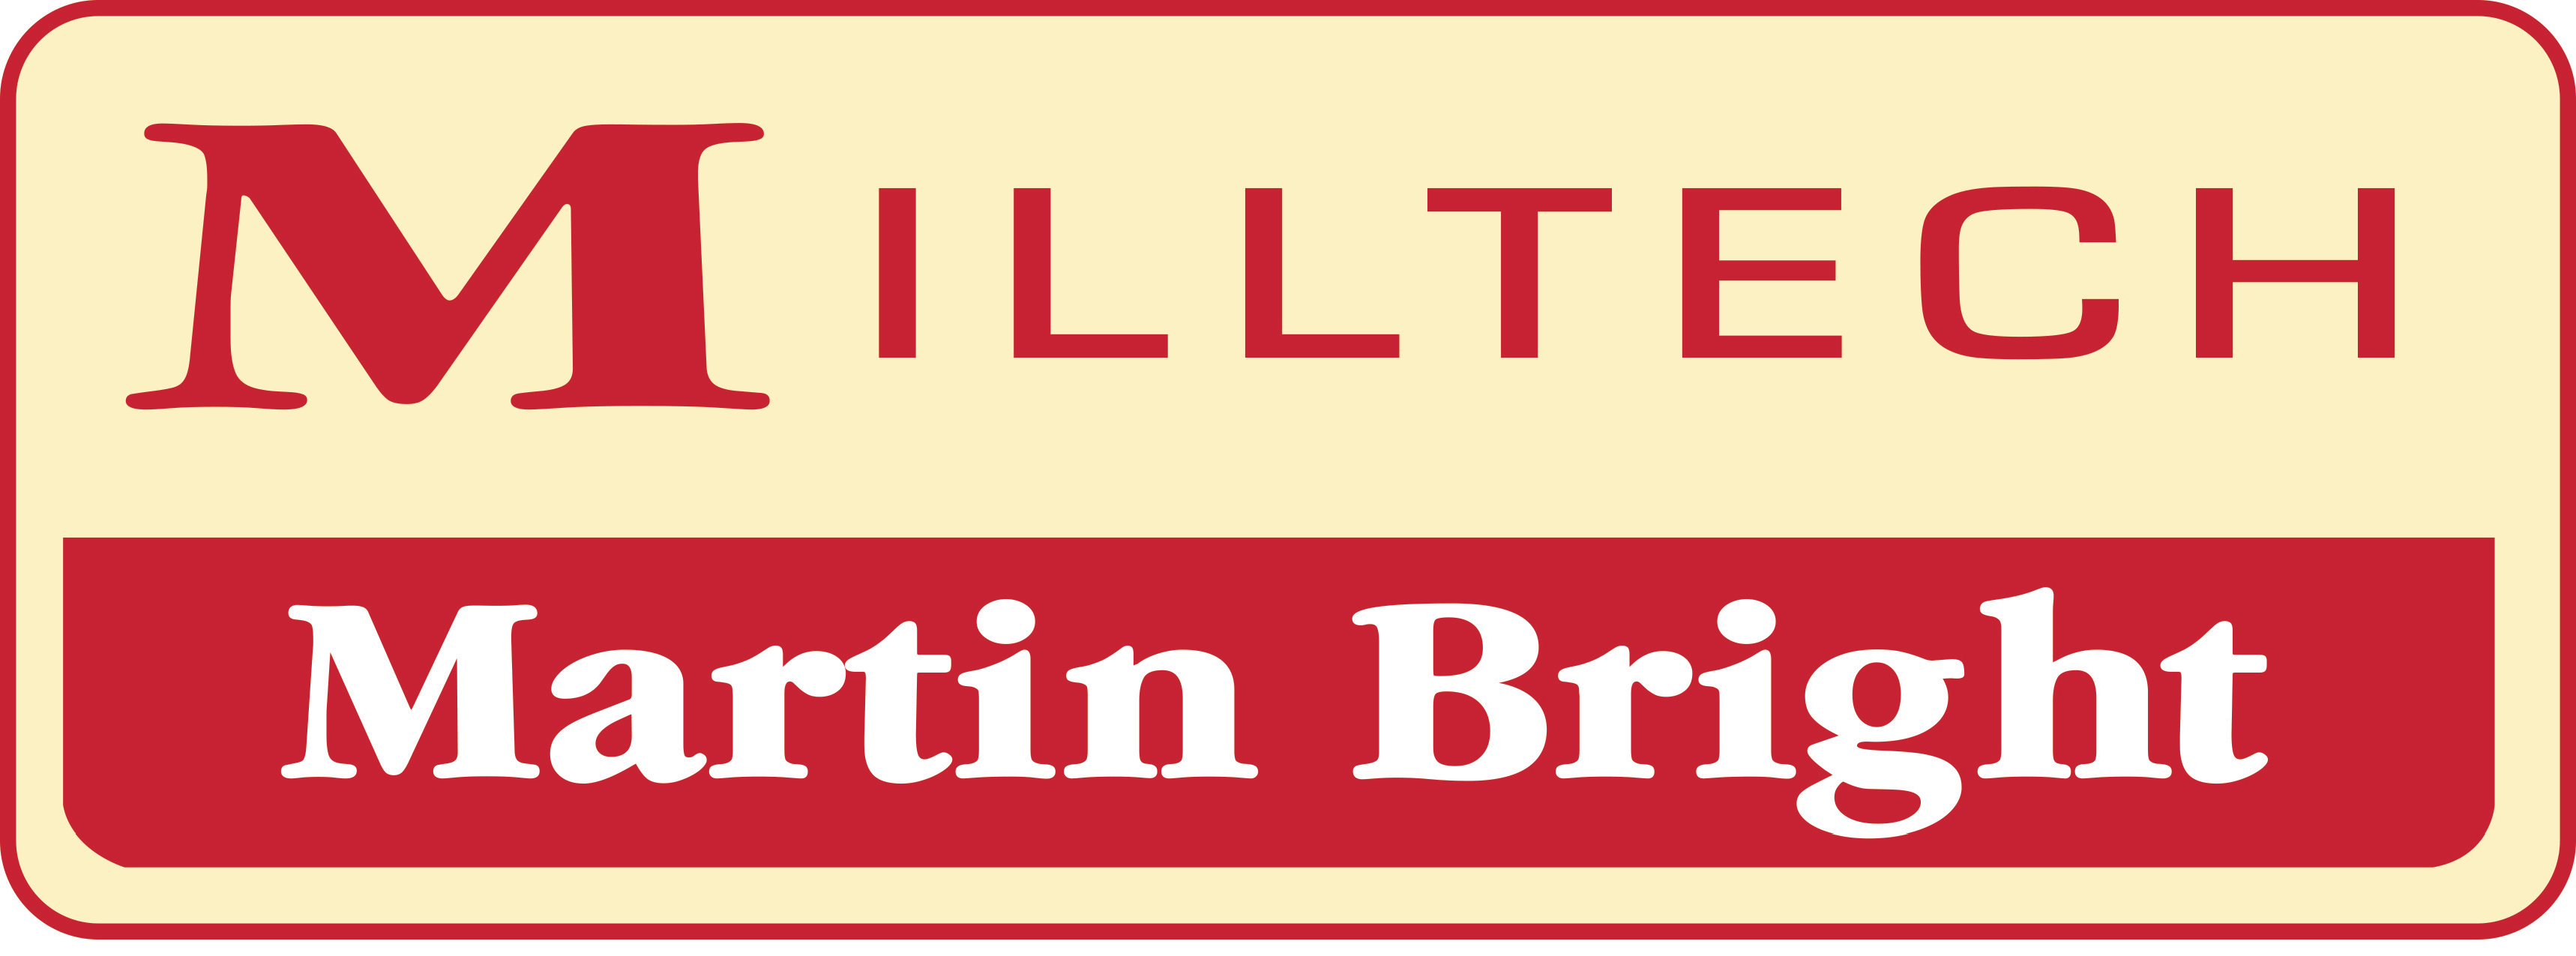 Milltech Martin Bright